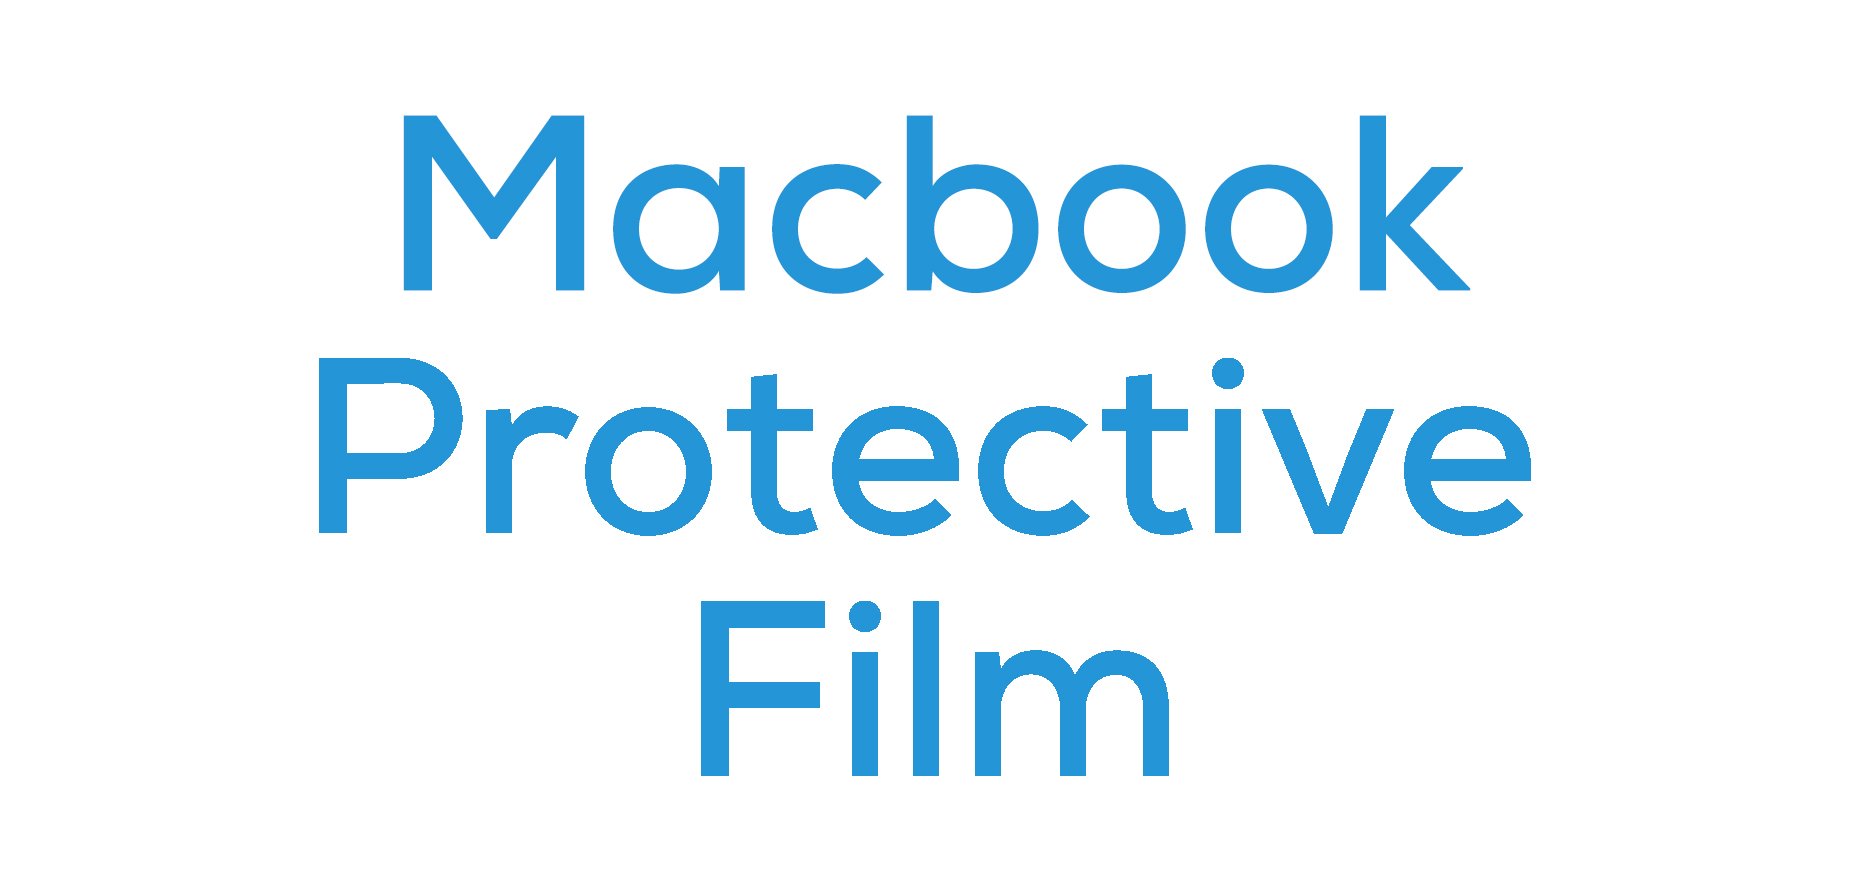 Macbook Protective Film